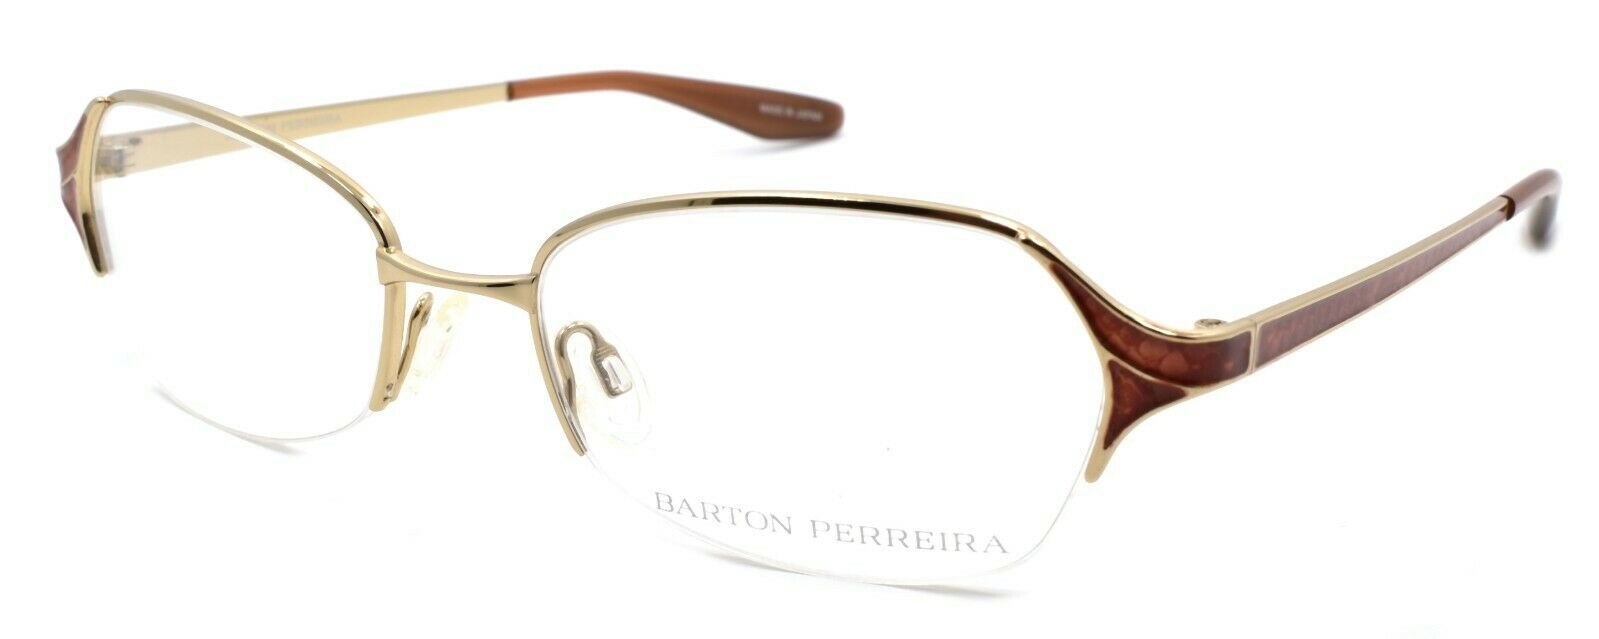 1-Barton Perreira Valera Women's Eyeglasses Frames 50-18-135 Gold / Rust Snake-672263039914-IKSpecs